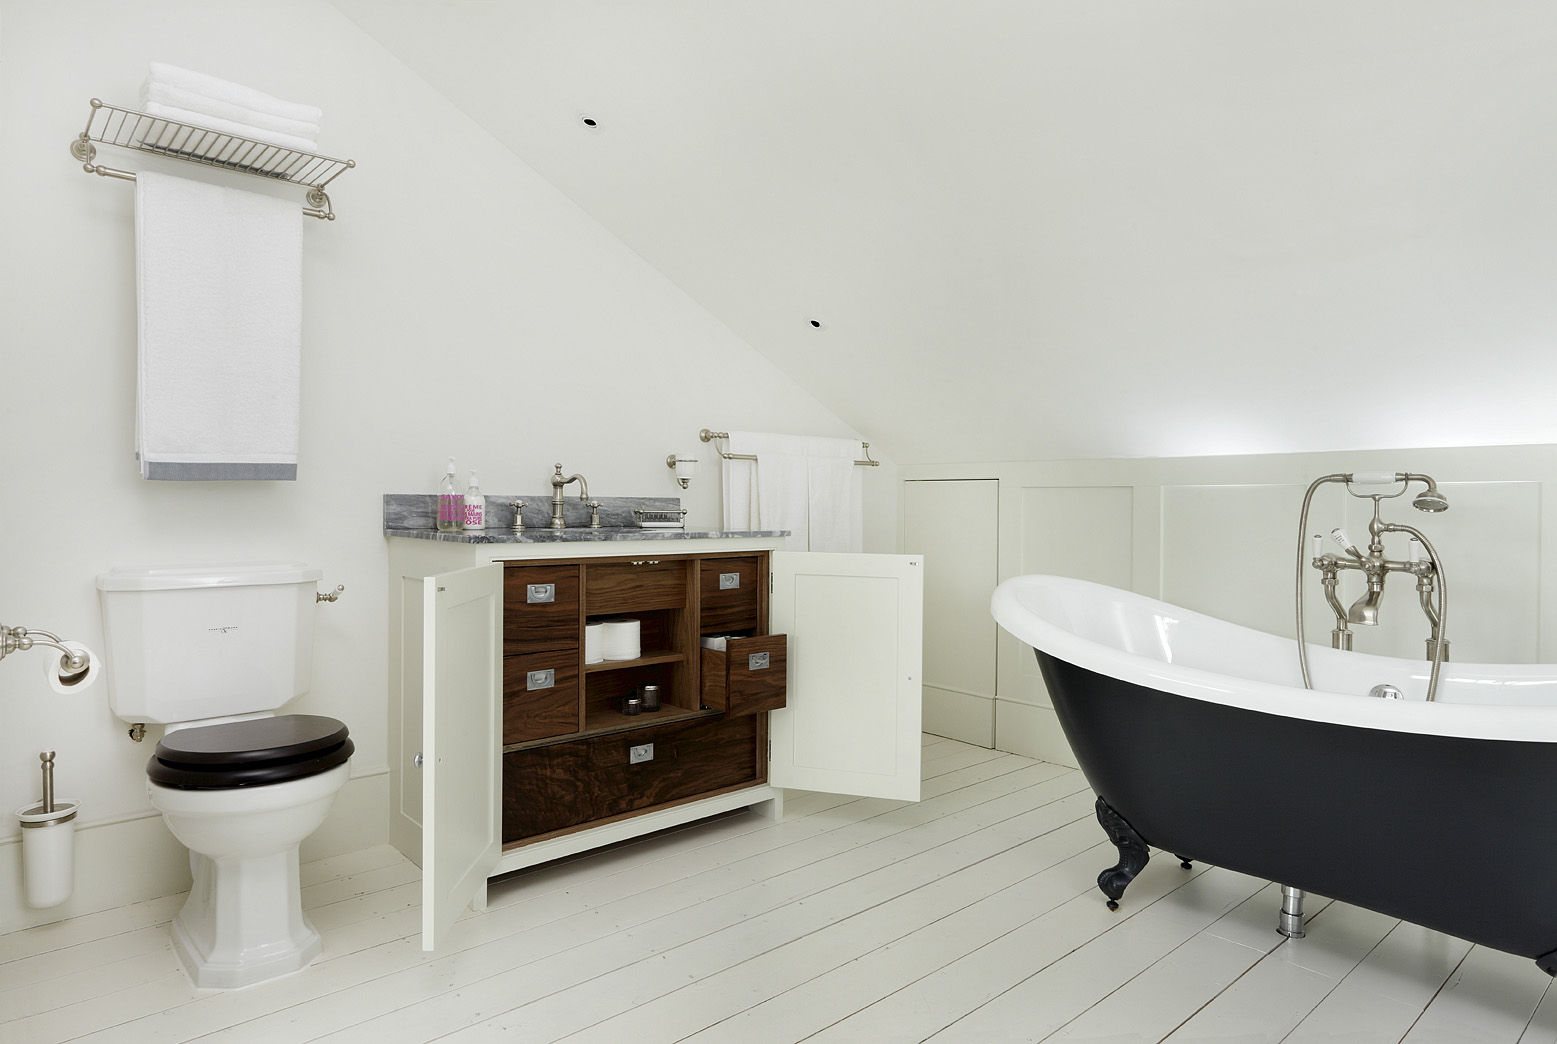 BATHROOMS: TRADITIONAL-STYLE BATHROOM Cue & Co of London Classic style bathroom